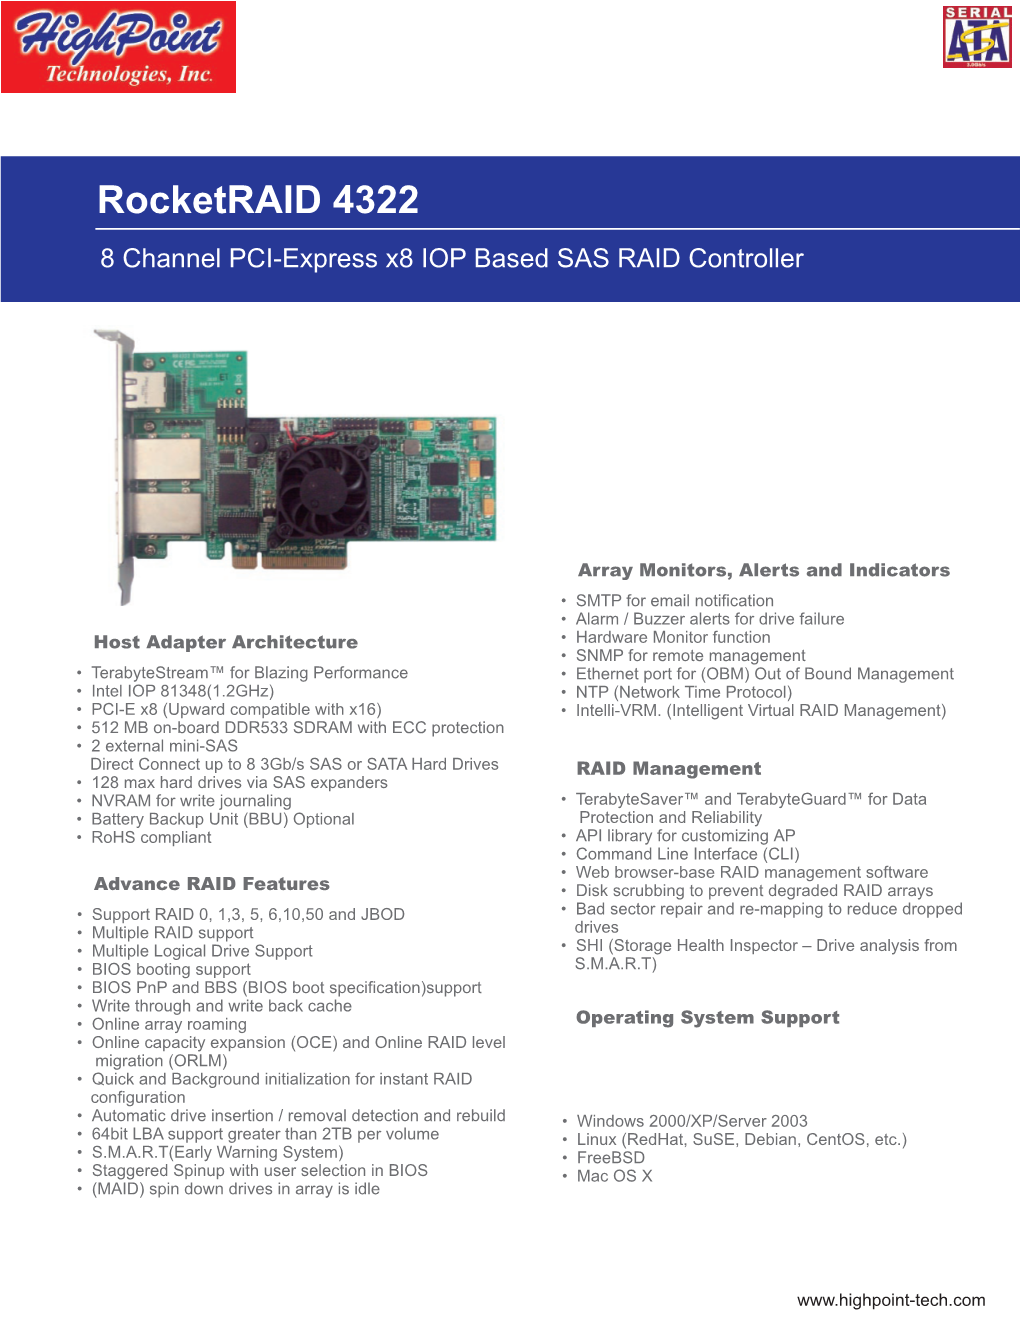 Rocketraid 4322 8 Channel PCI-Express X8 IOP Based SAS RAID Controller